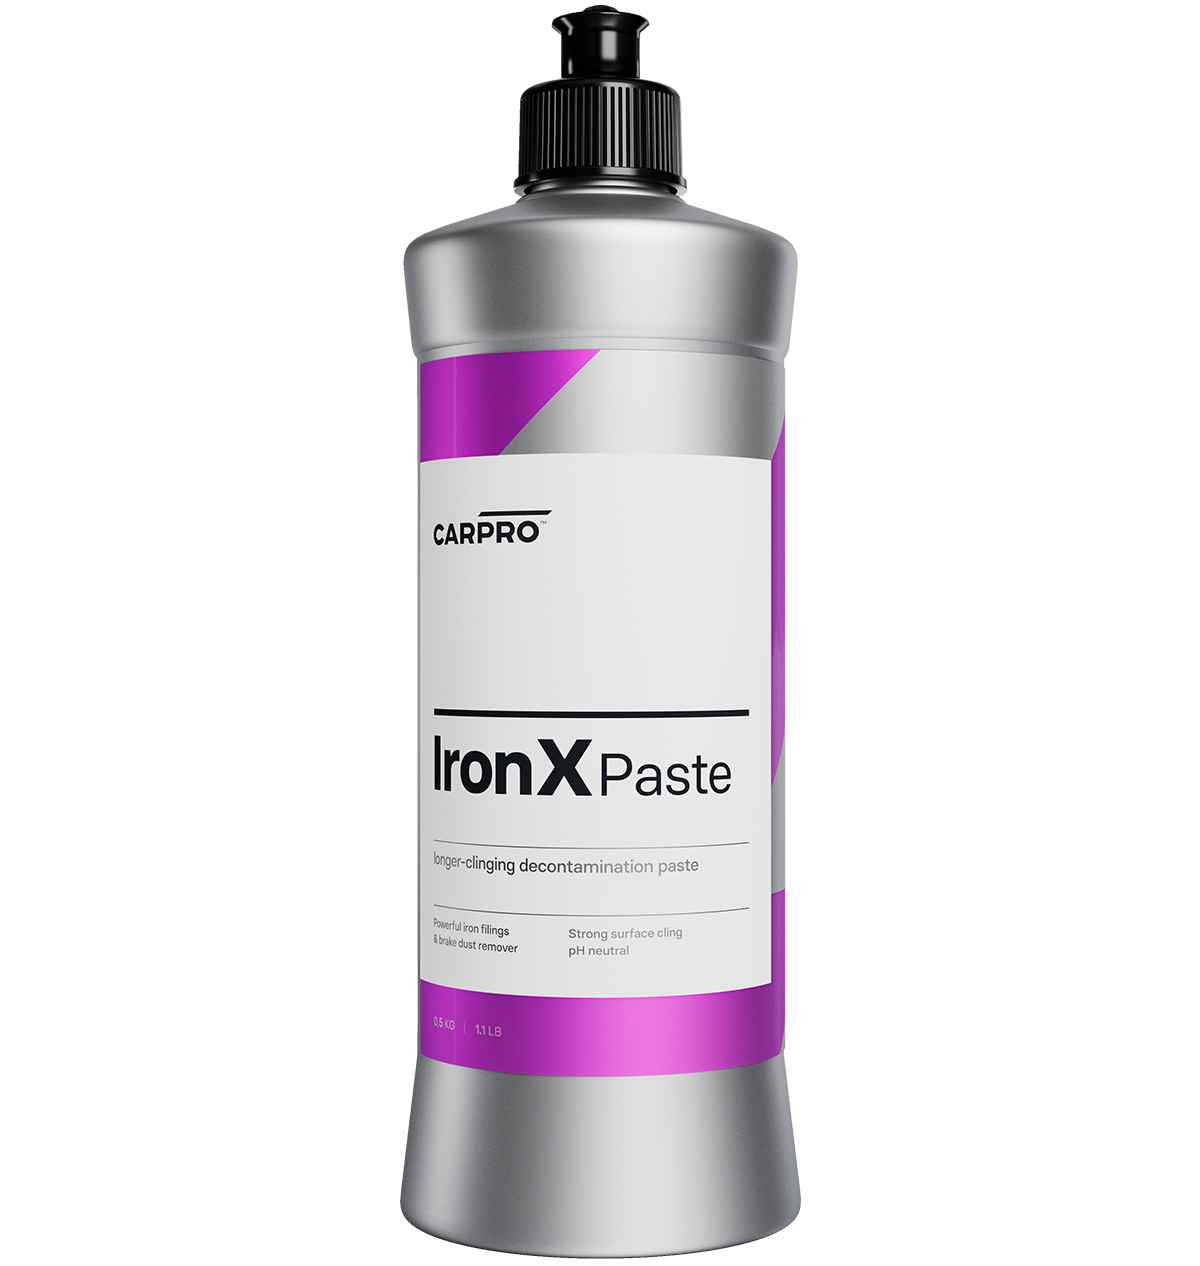 IronX Paste